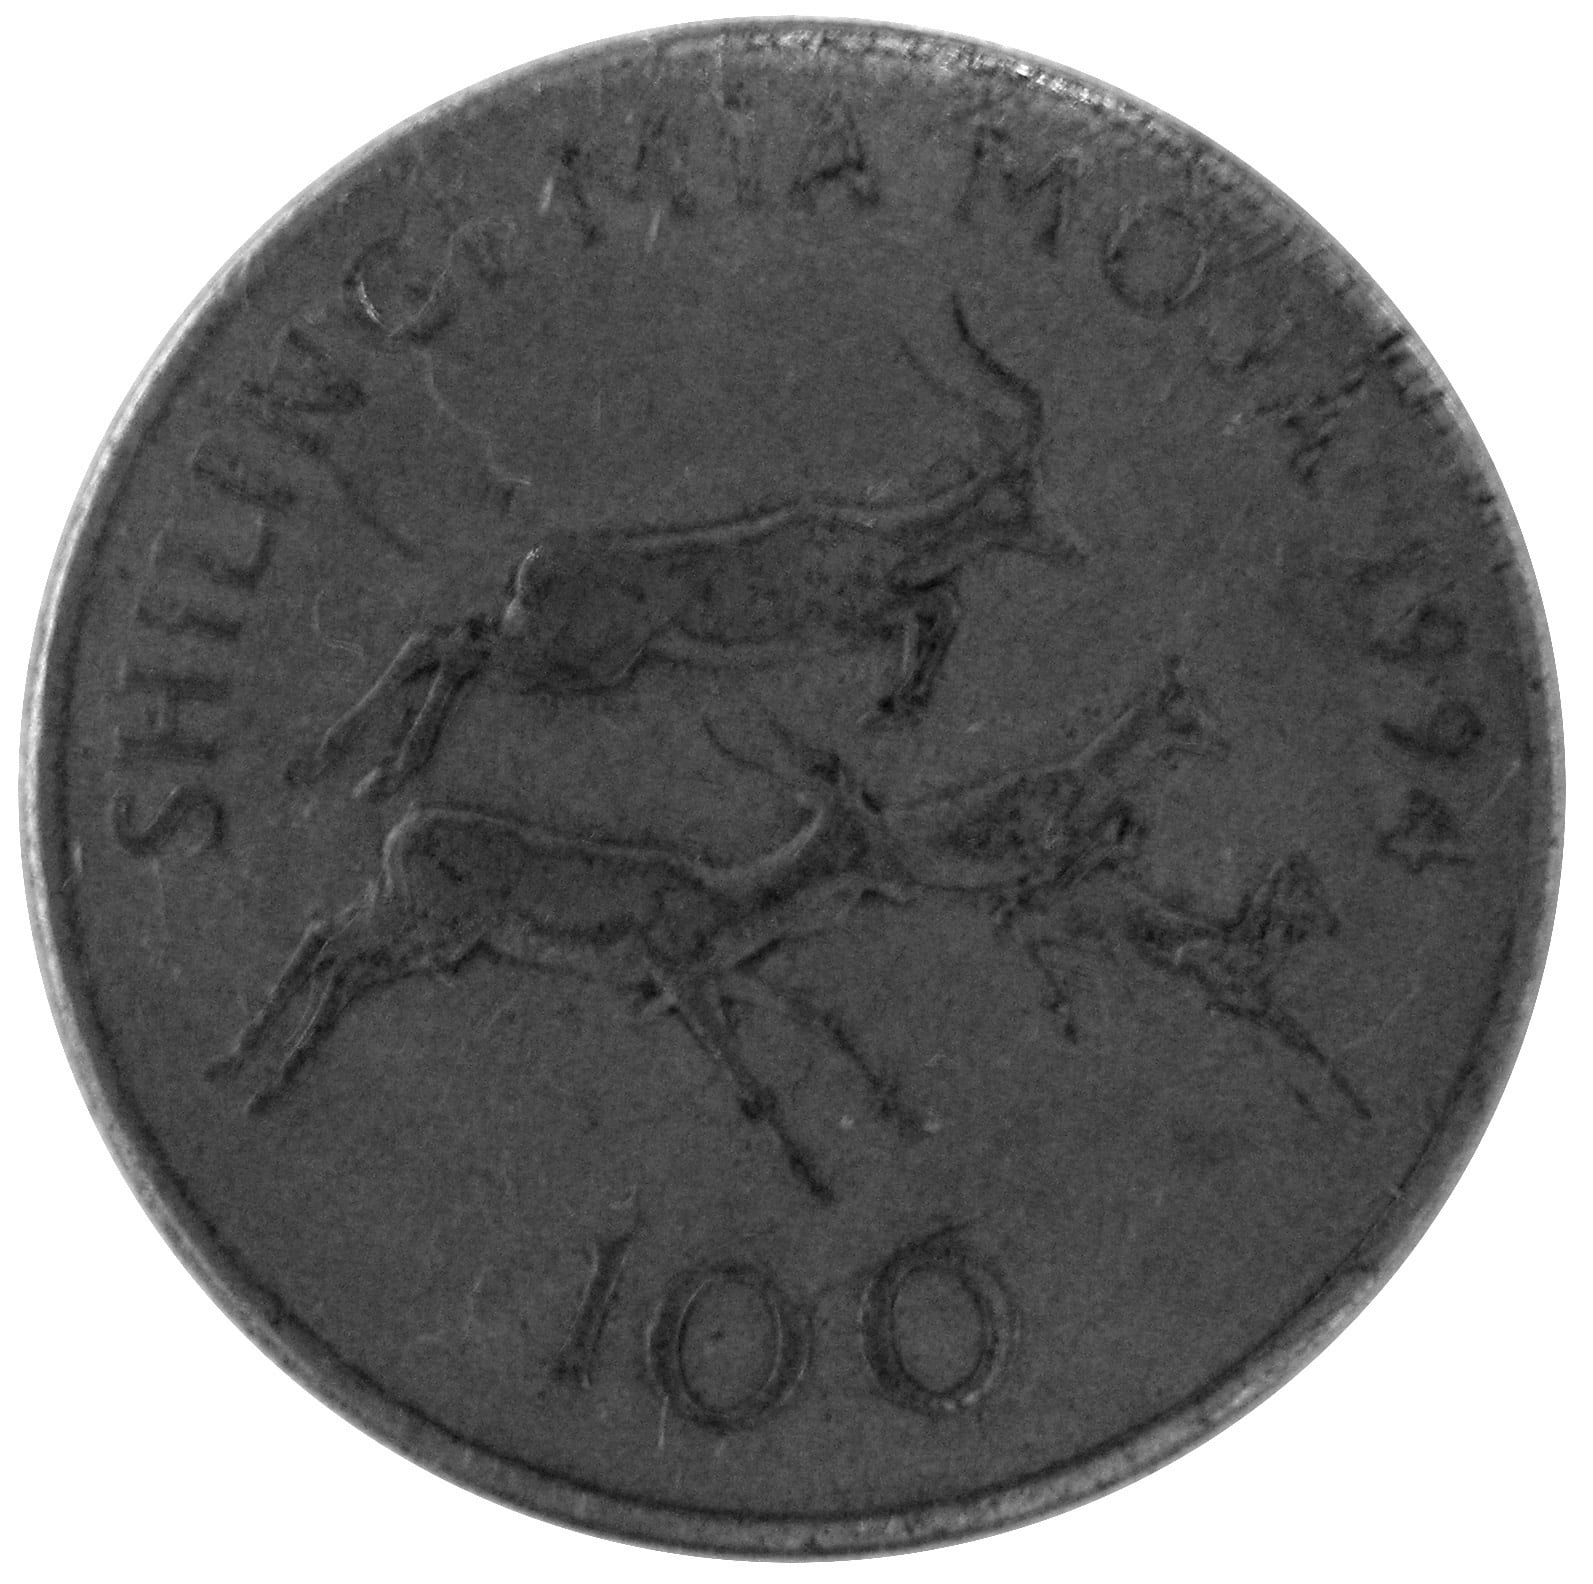 Tanzania 100 shilling coin